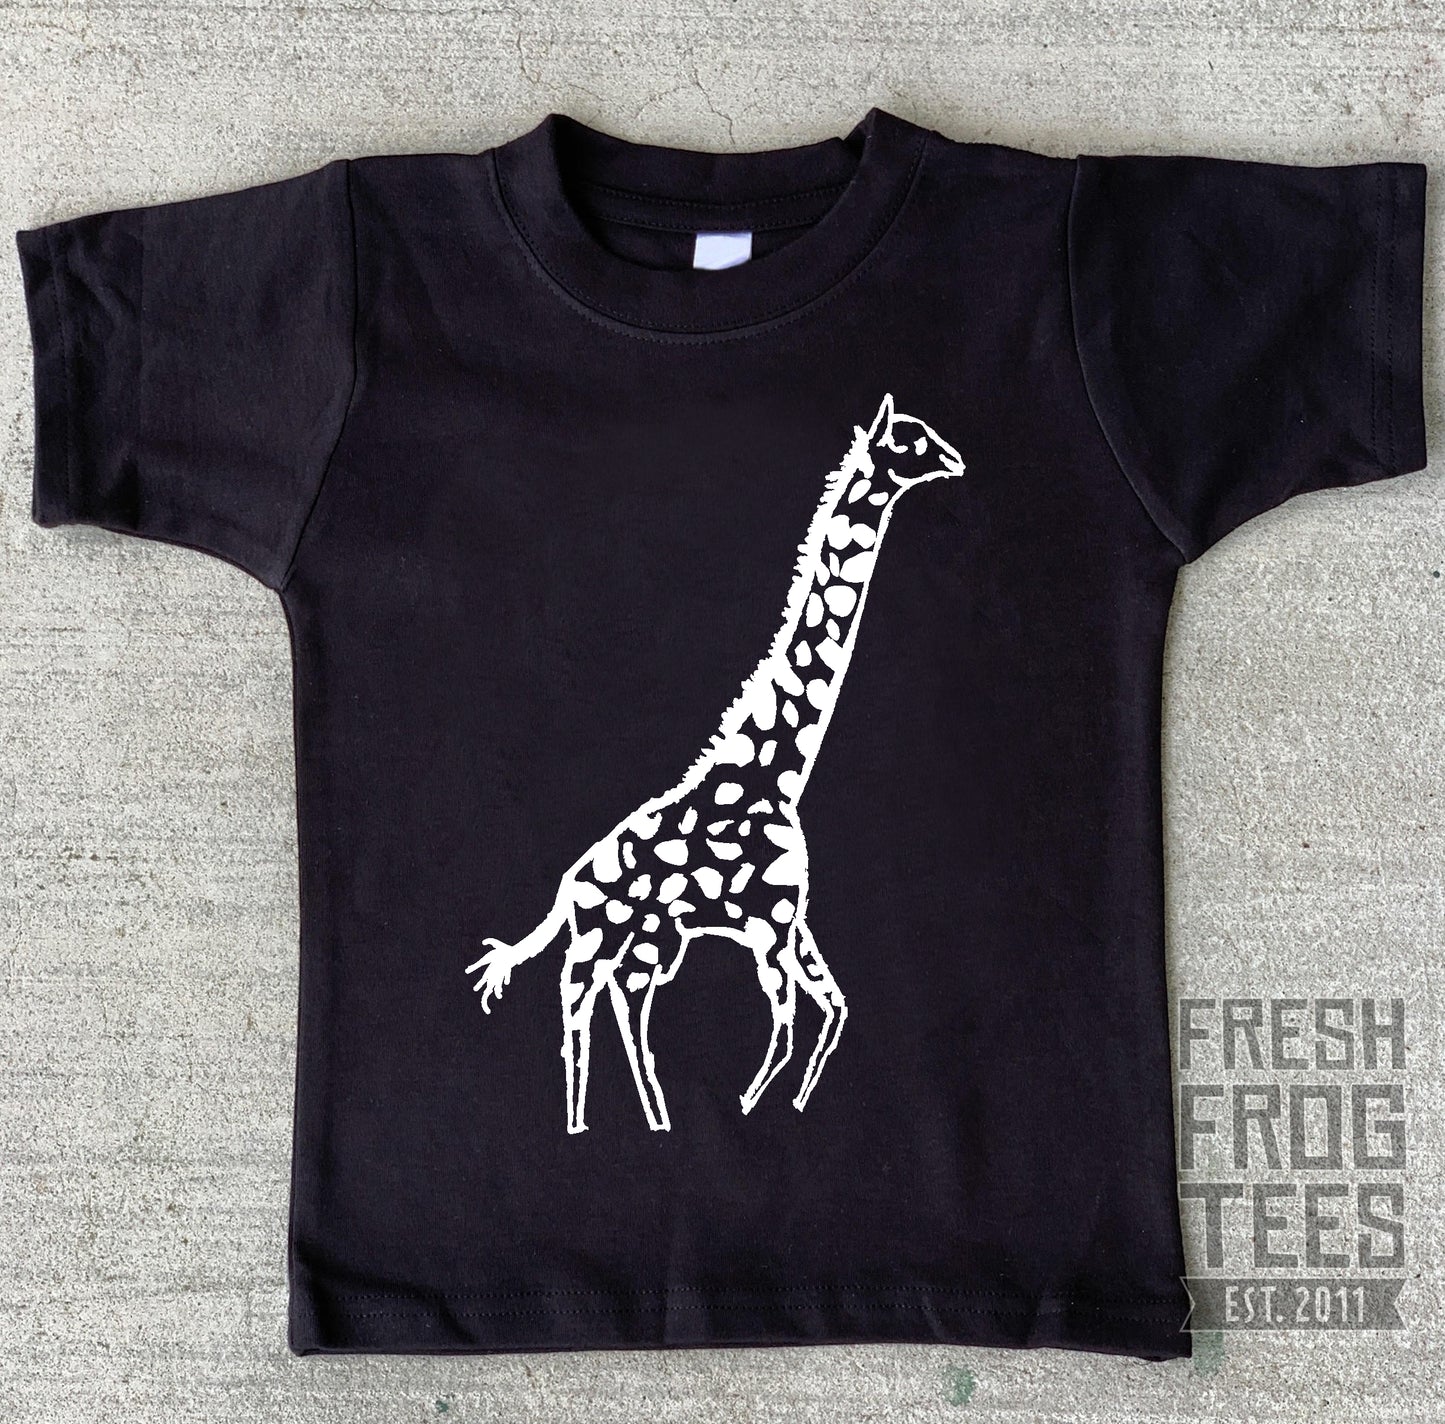 Giraffe shirt